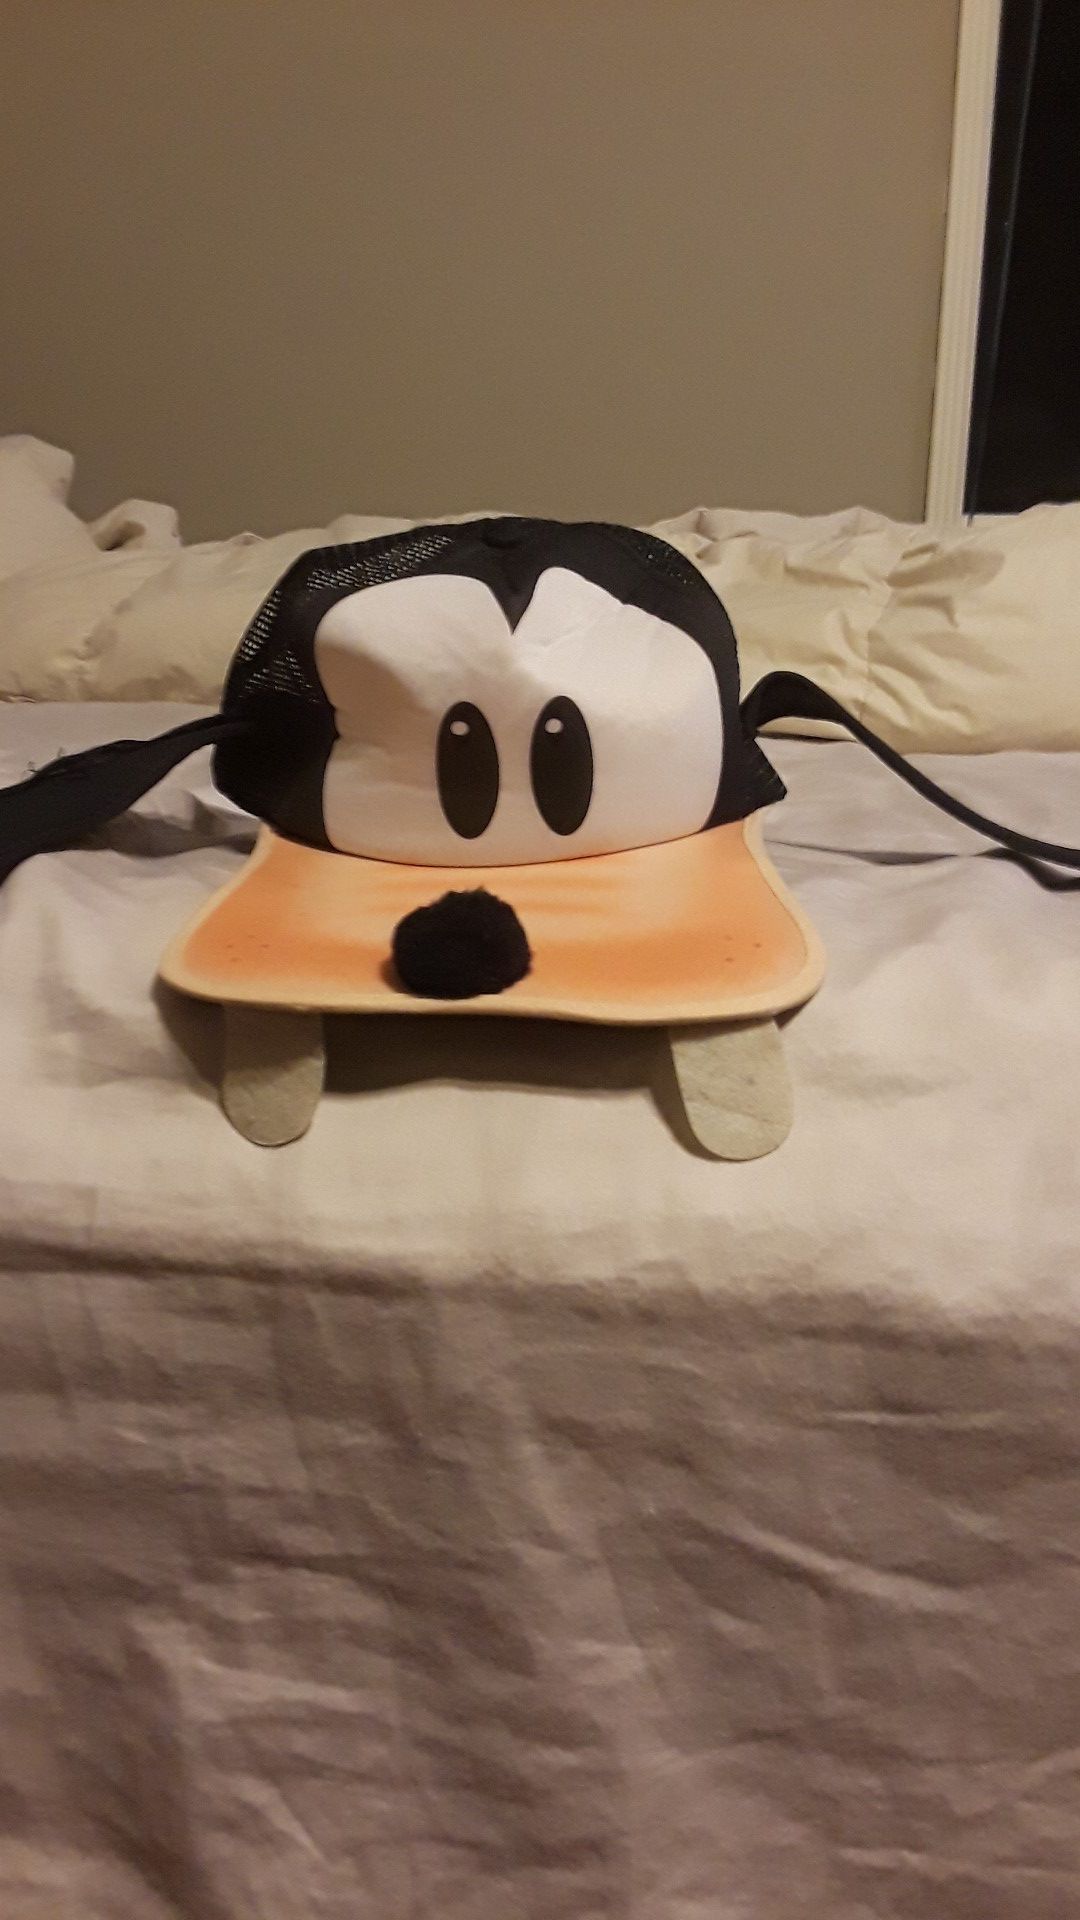 Goofy hat with ears and teeth